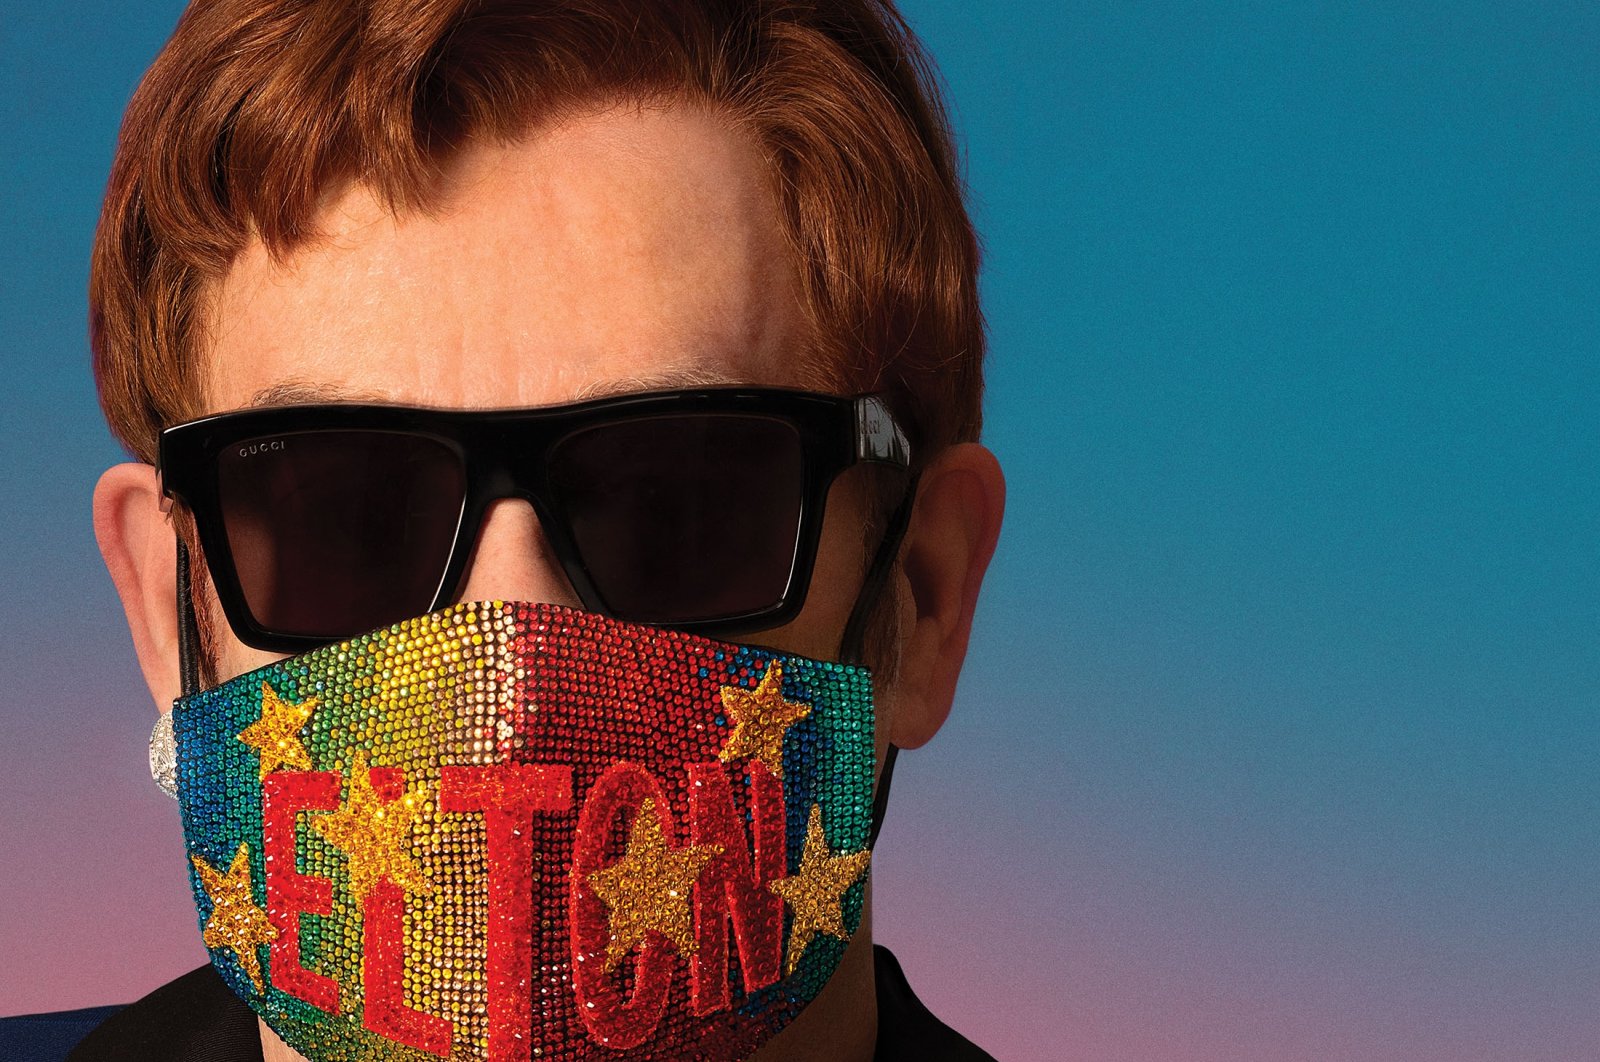 A promotional art for the album "The Lockdown Sessions" shows artist Elton John. (Interscope Records via AP)